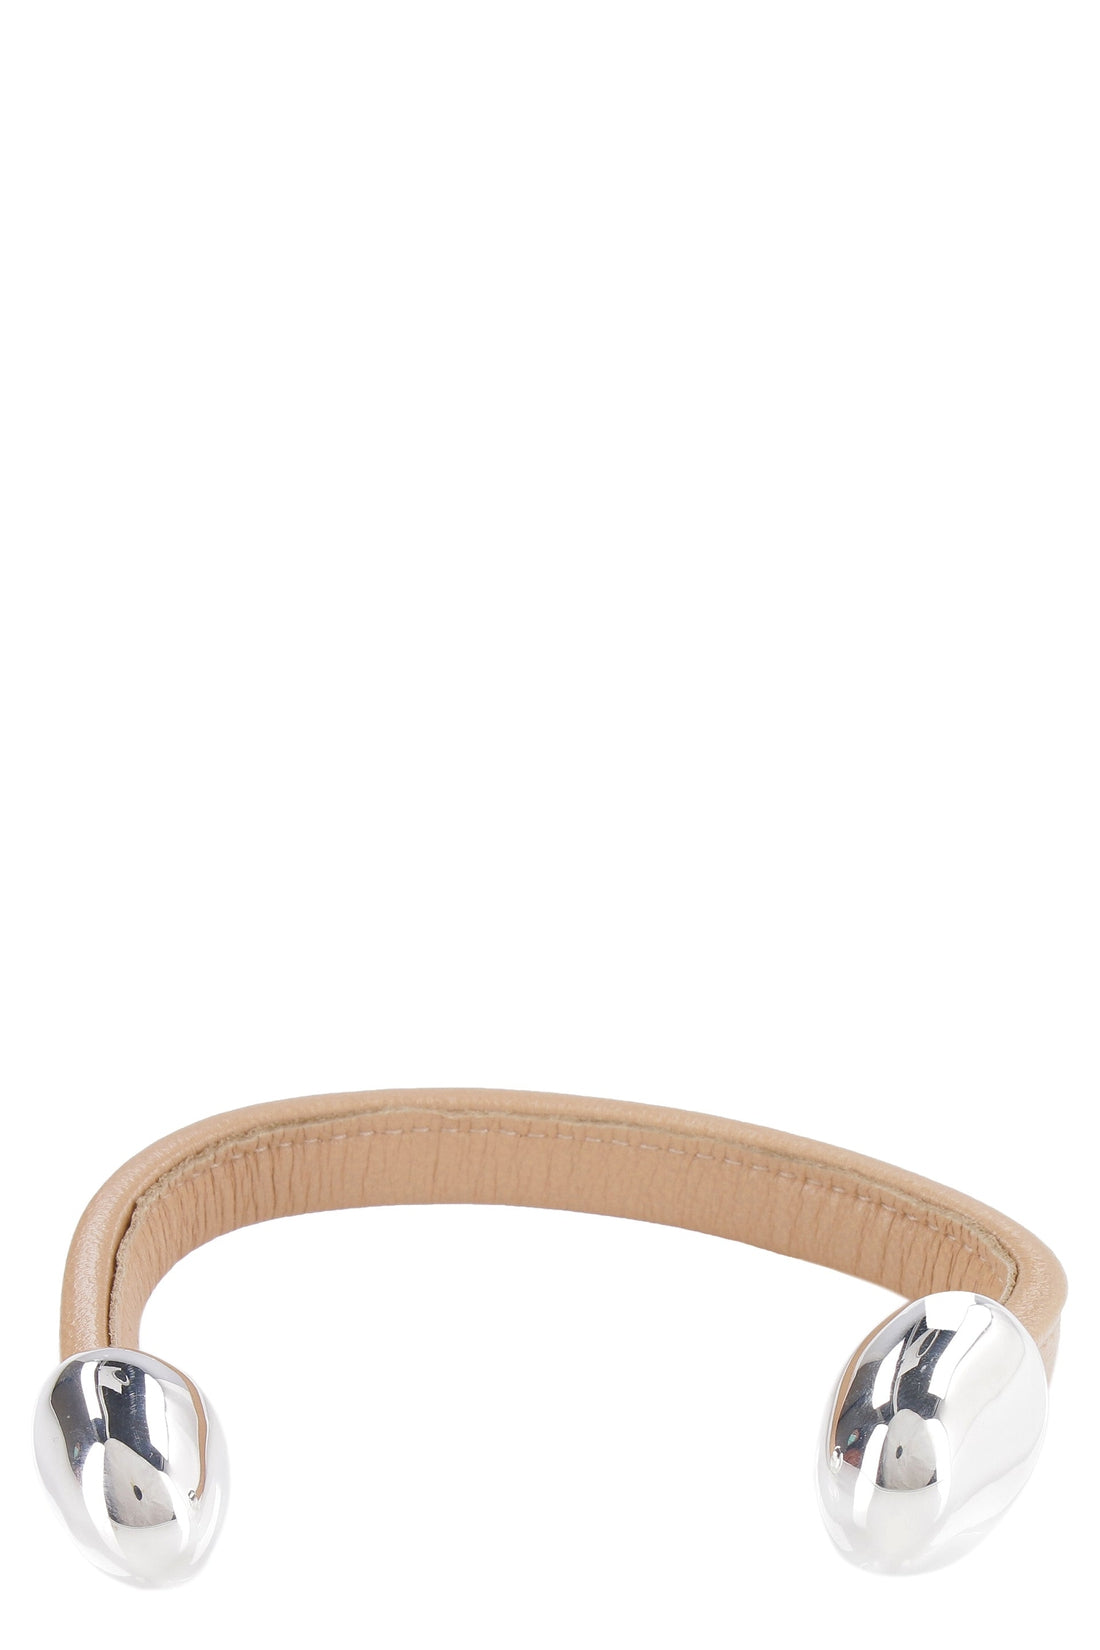 Bottega Veneta-OUTLET-SALE-Leather bracelet-ARCHIVIST